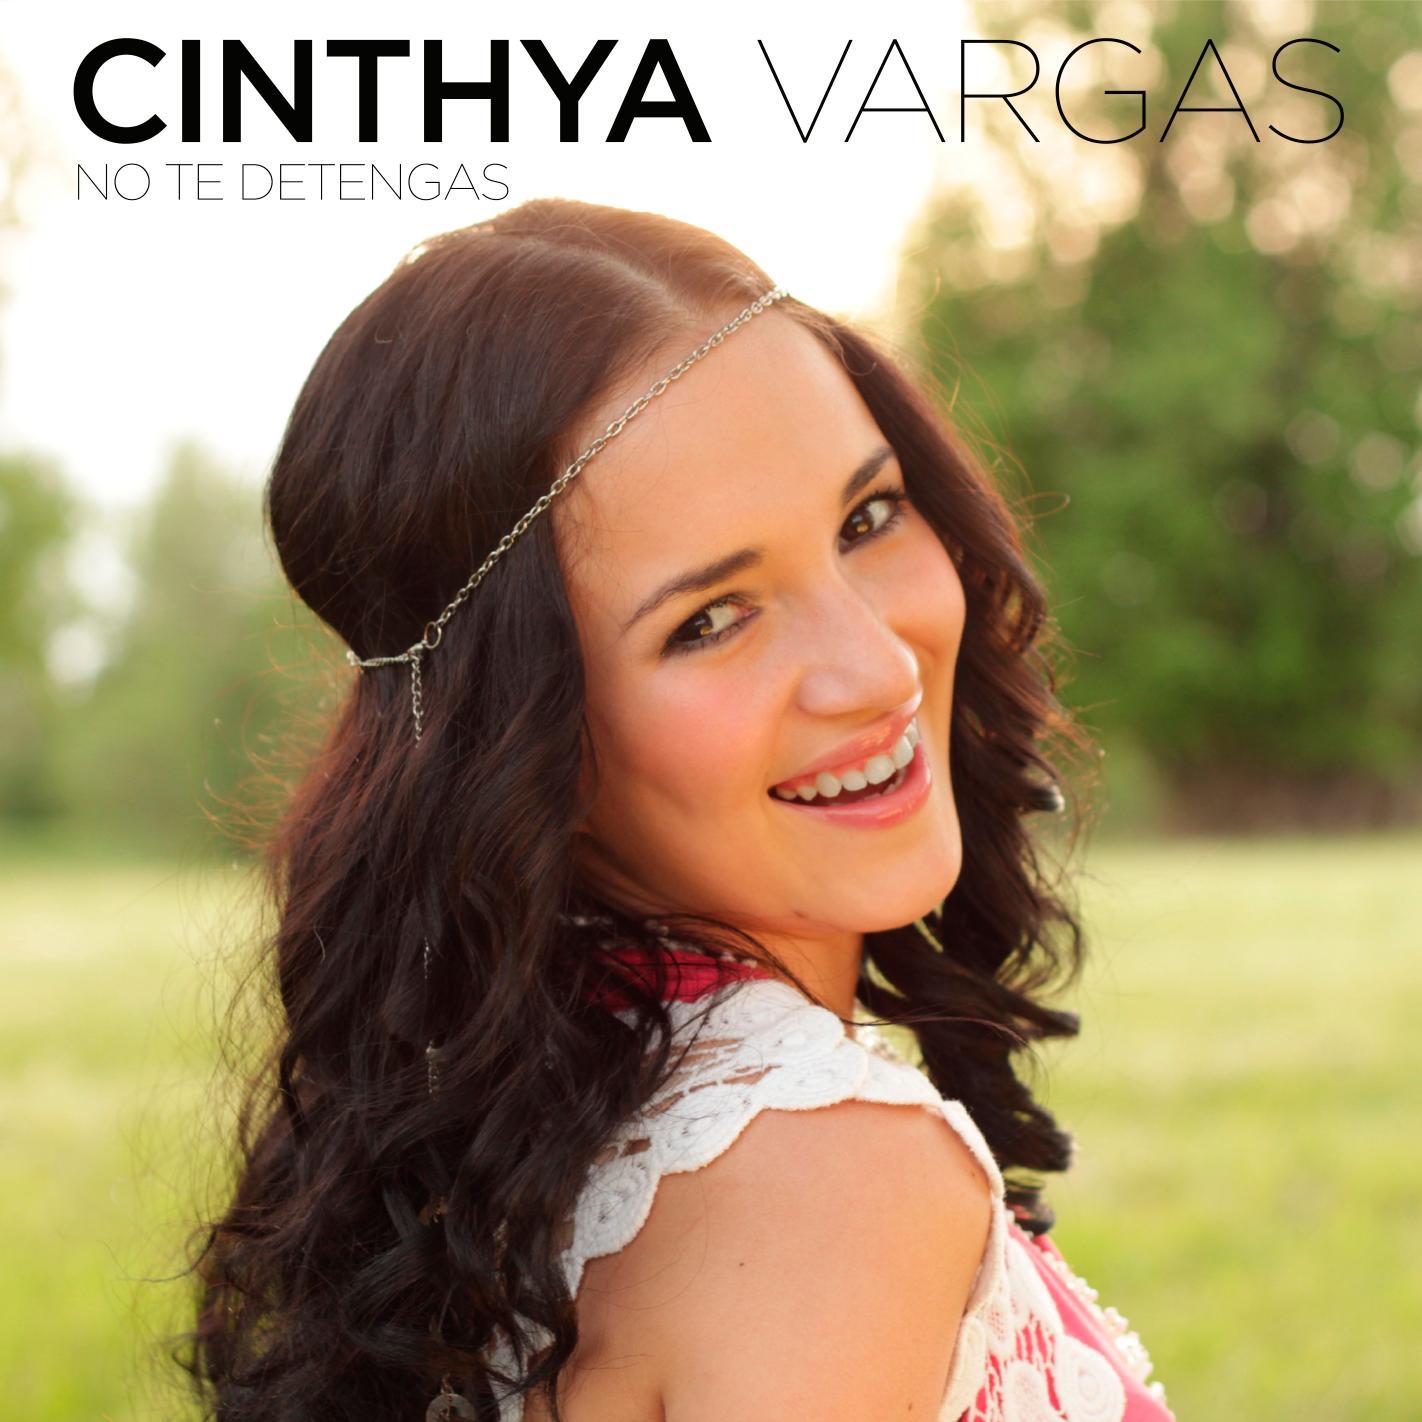 Cinthya Vargas